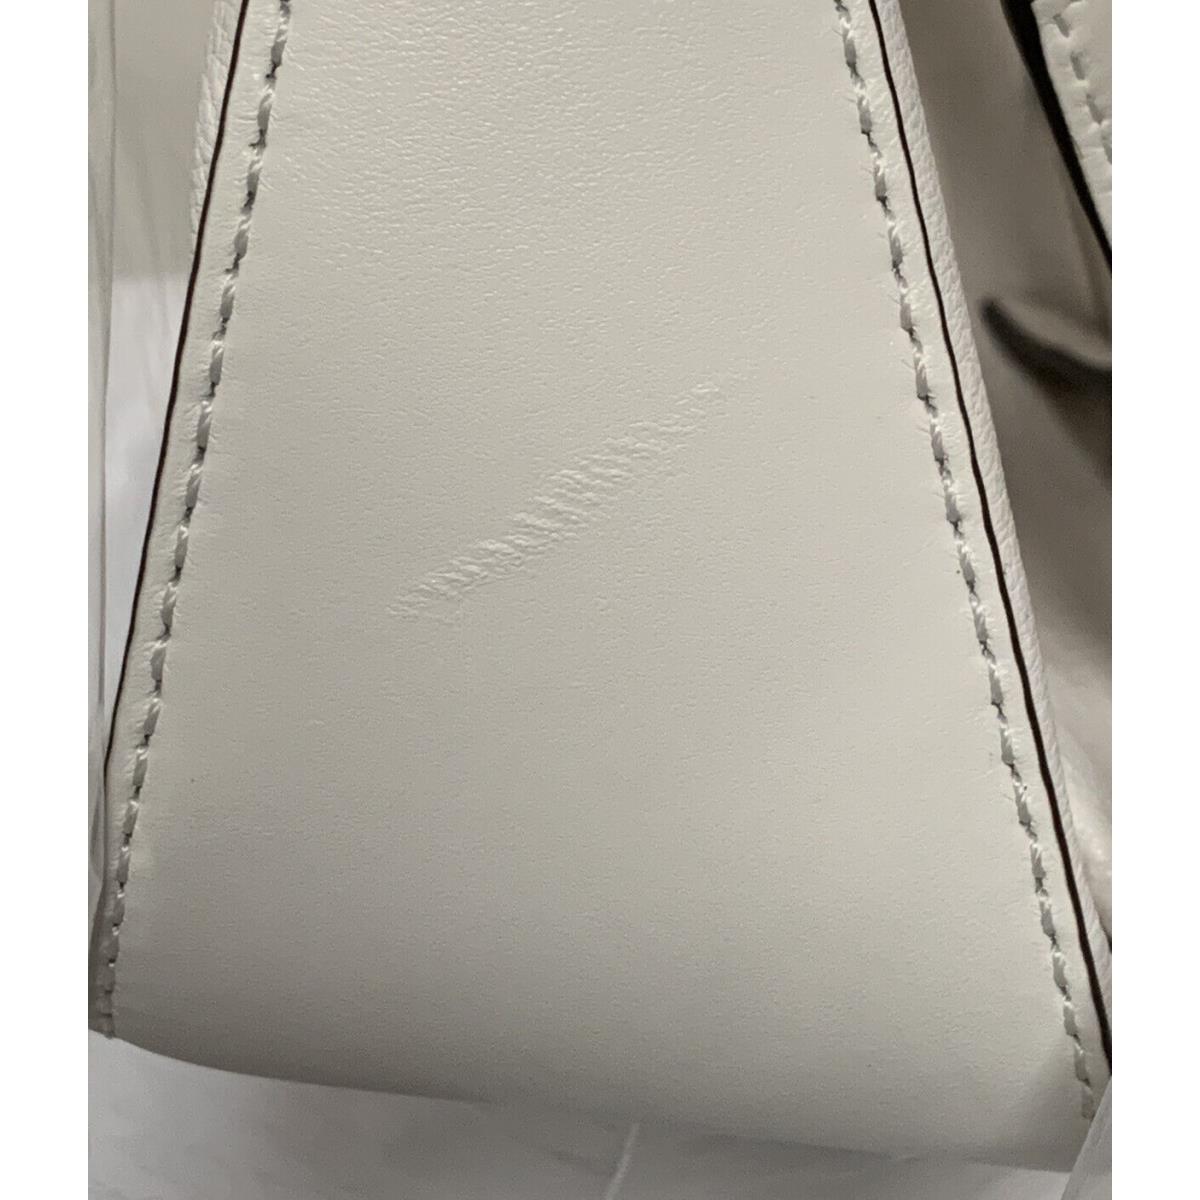 Michael Kors  bag  Lillie - White Exterior, Beige Lining, Gold Hardware 9